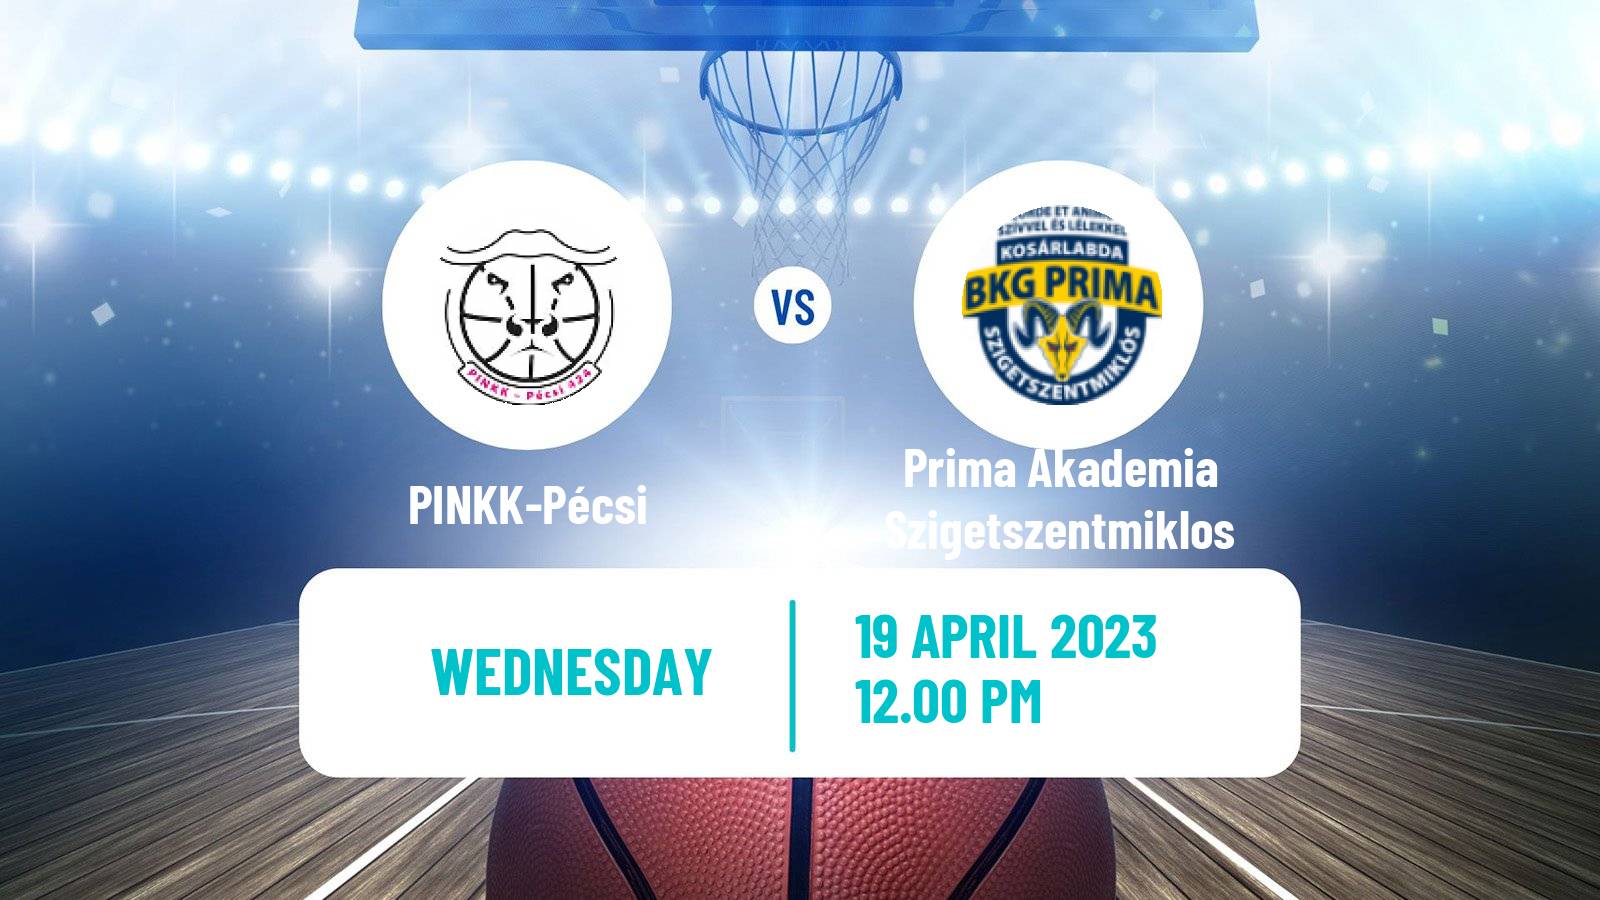 Basketball Hungarian NB I Basketball Women PINKK-Pécsi - Prima Akademia Szigetszentmiklos